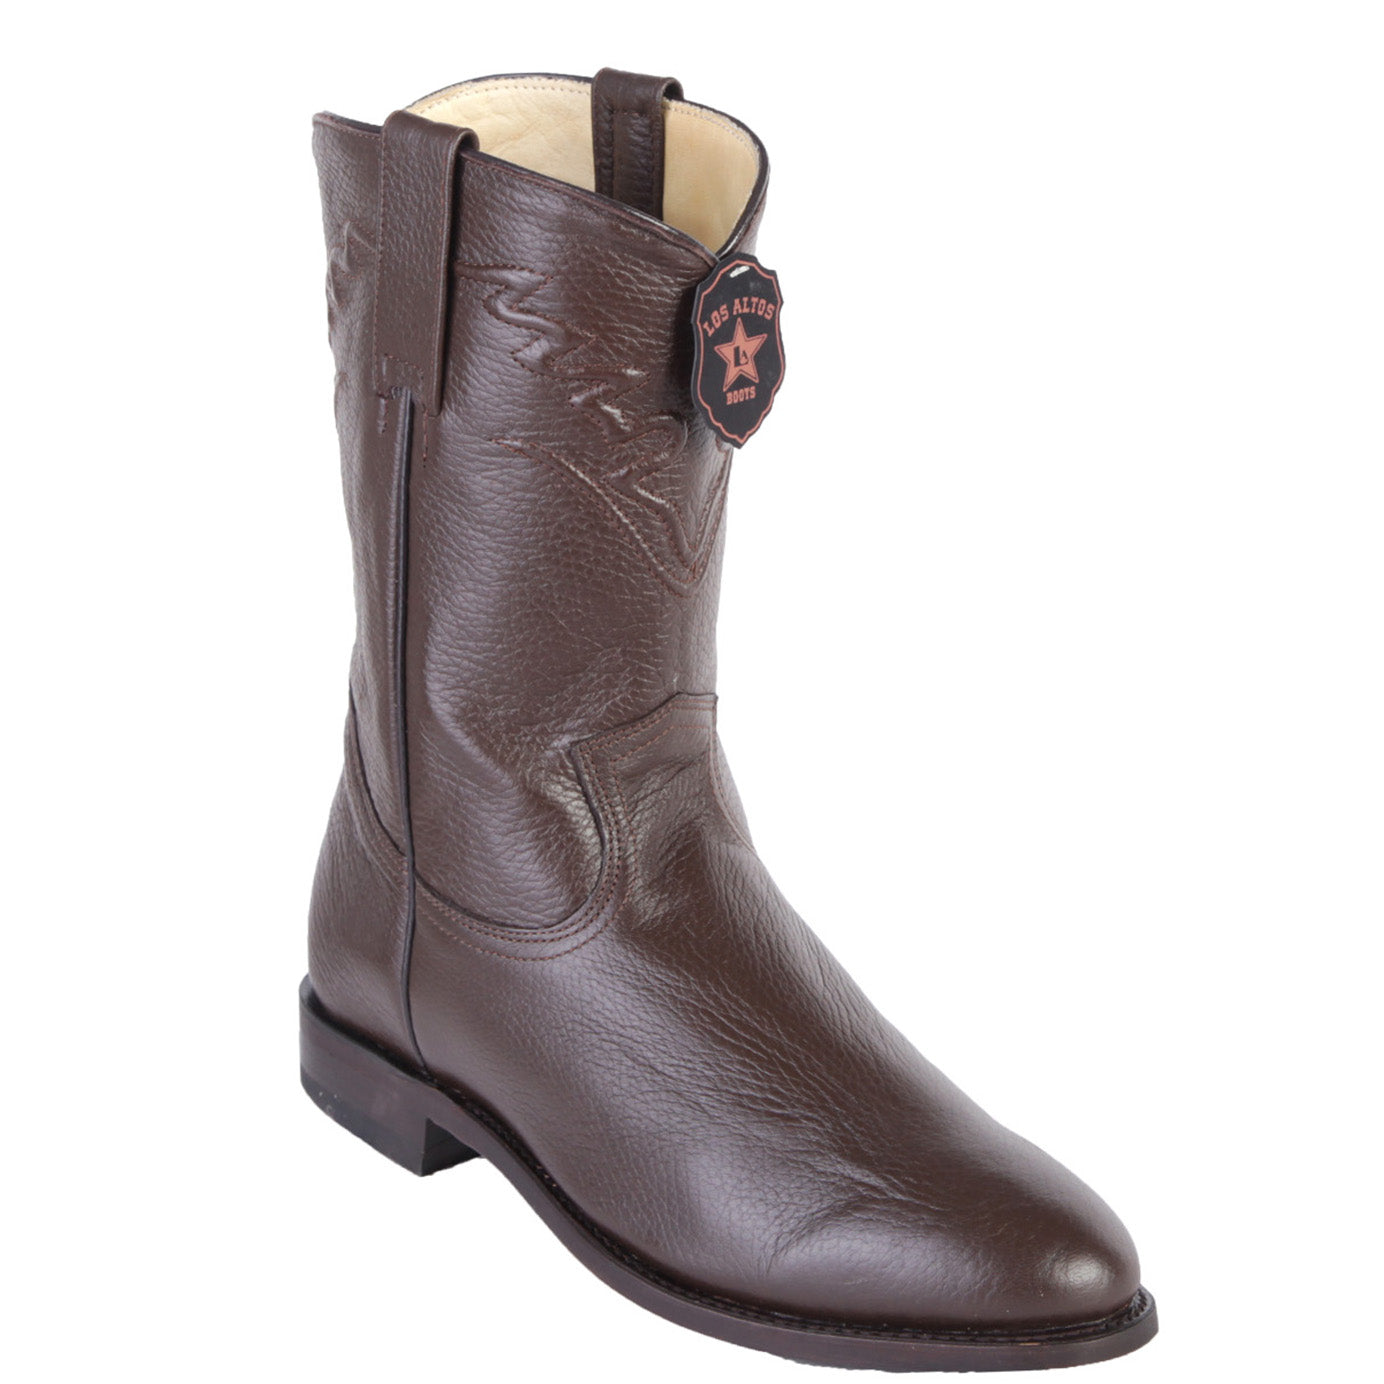 Brown roper boots for men